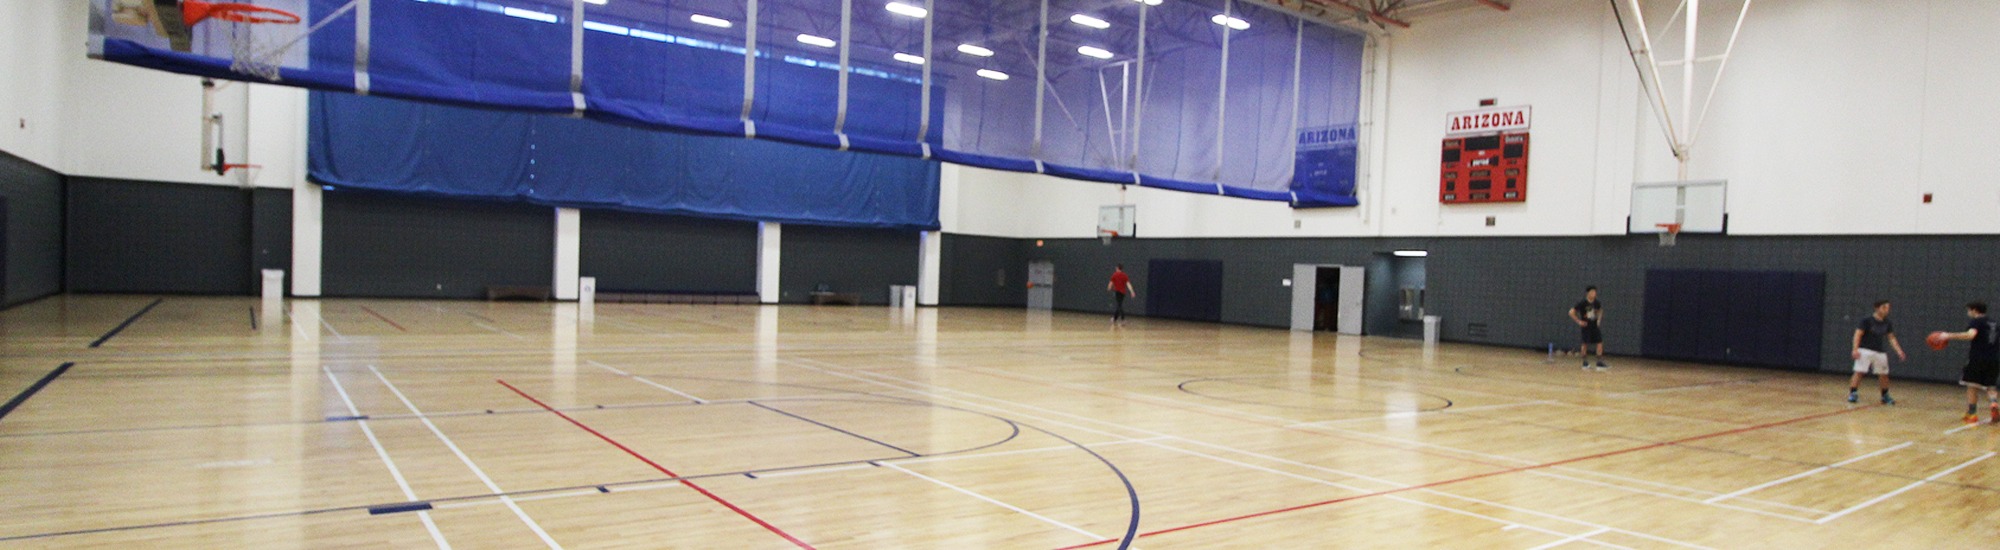 arizona basketball court